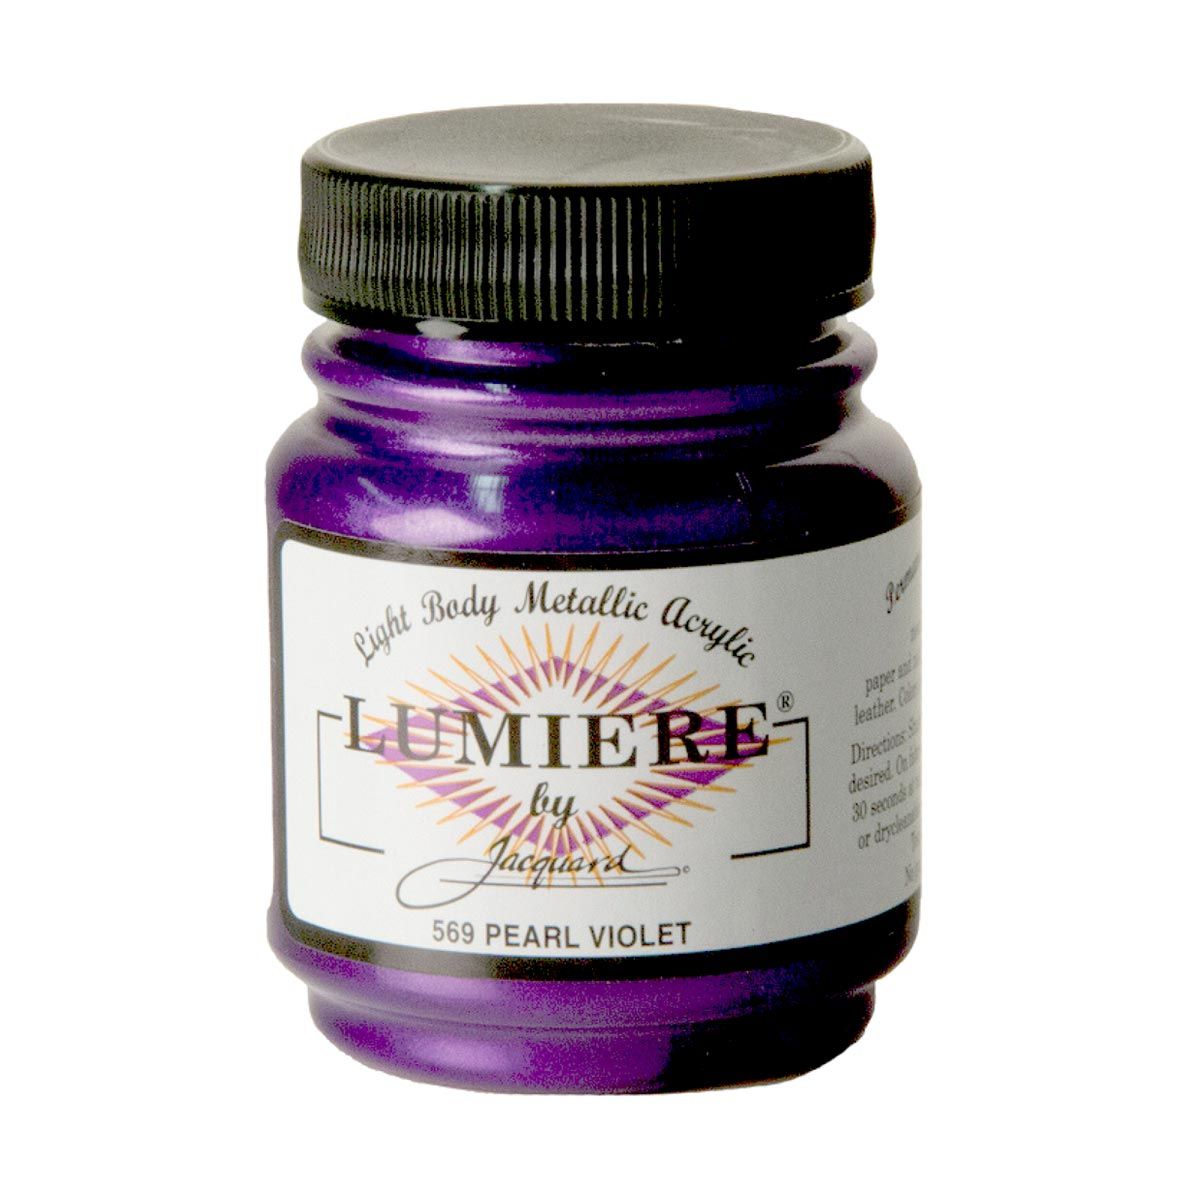 Jacquard Lumiere Acrylic 569 Pearl Violet 2.25-oz Jar